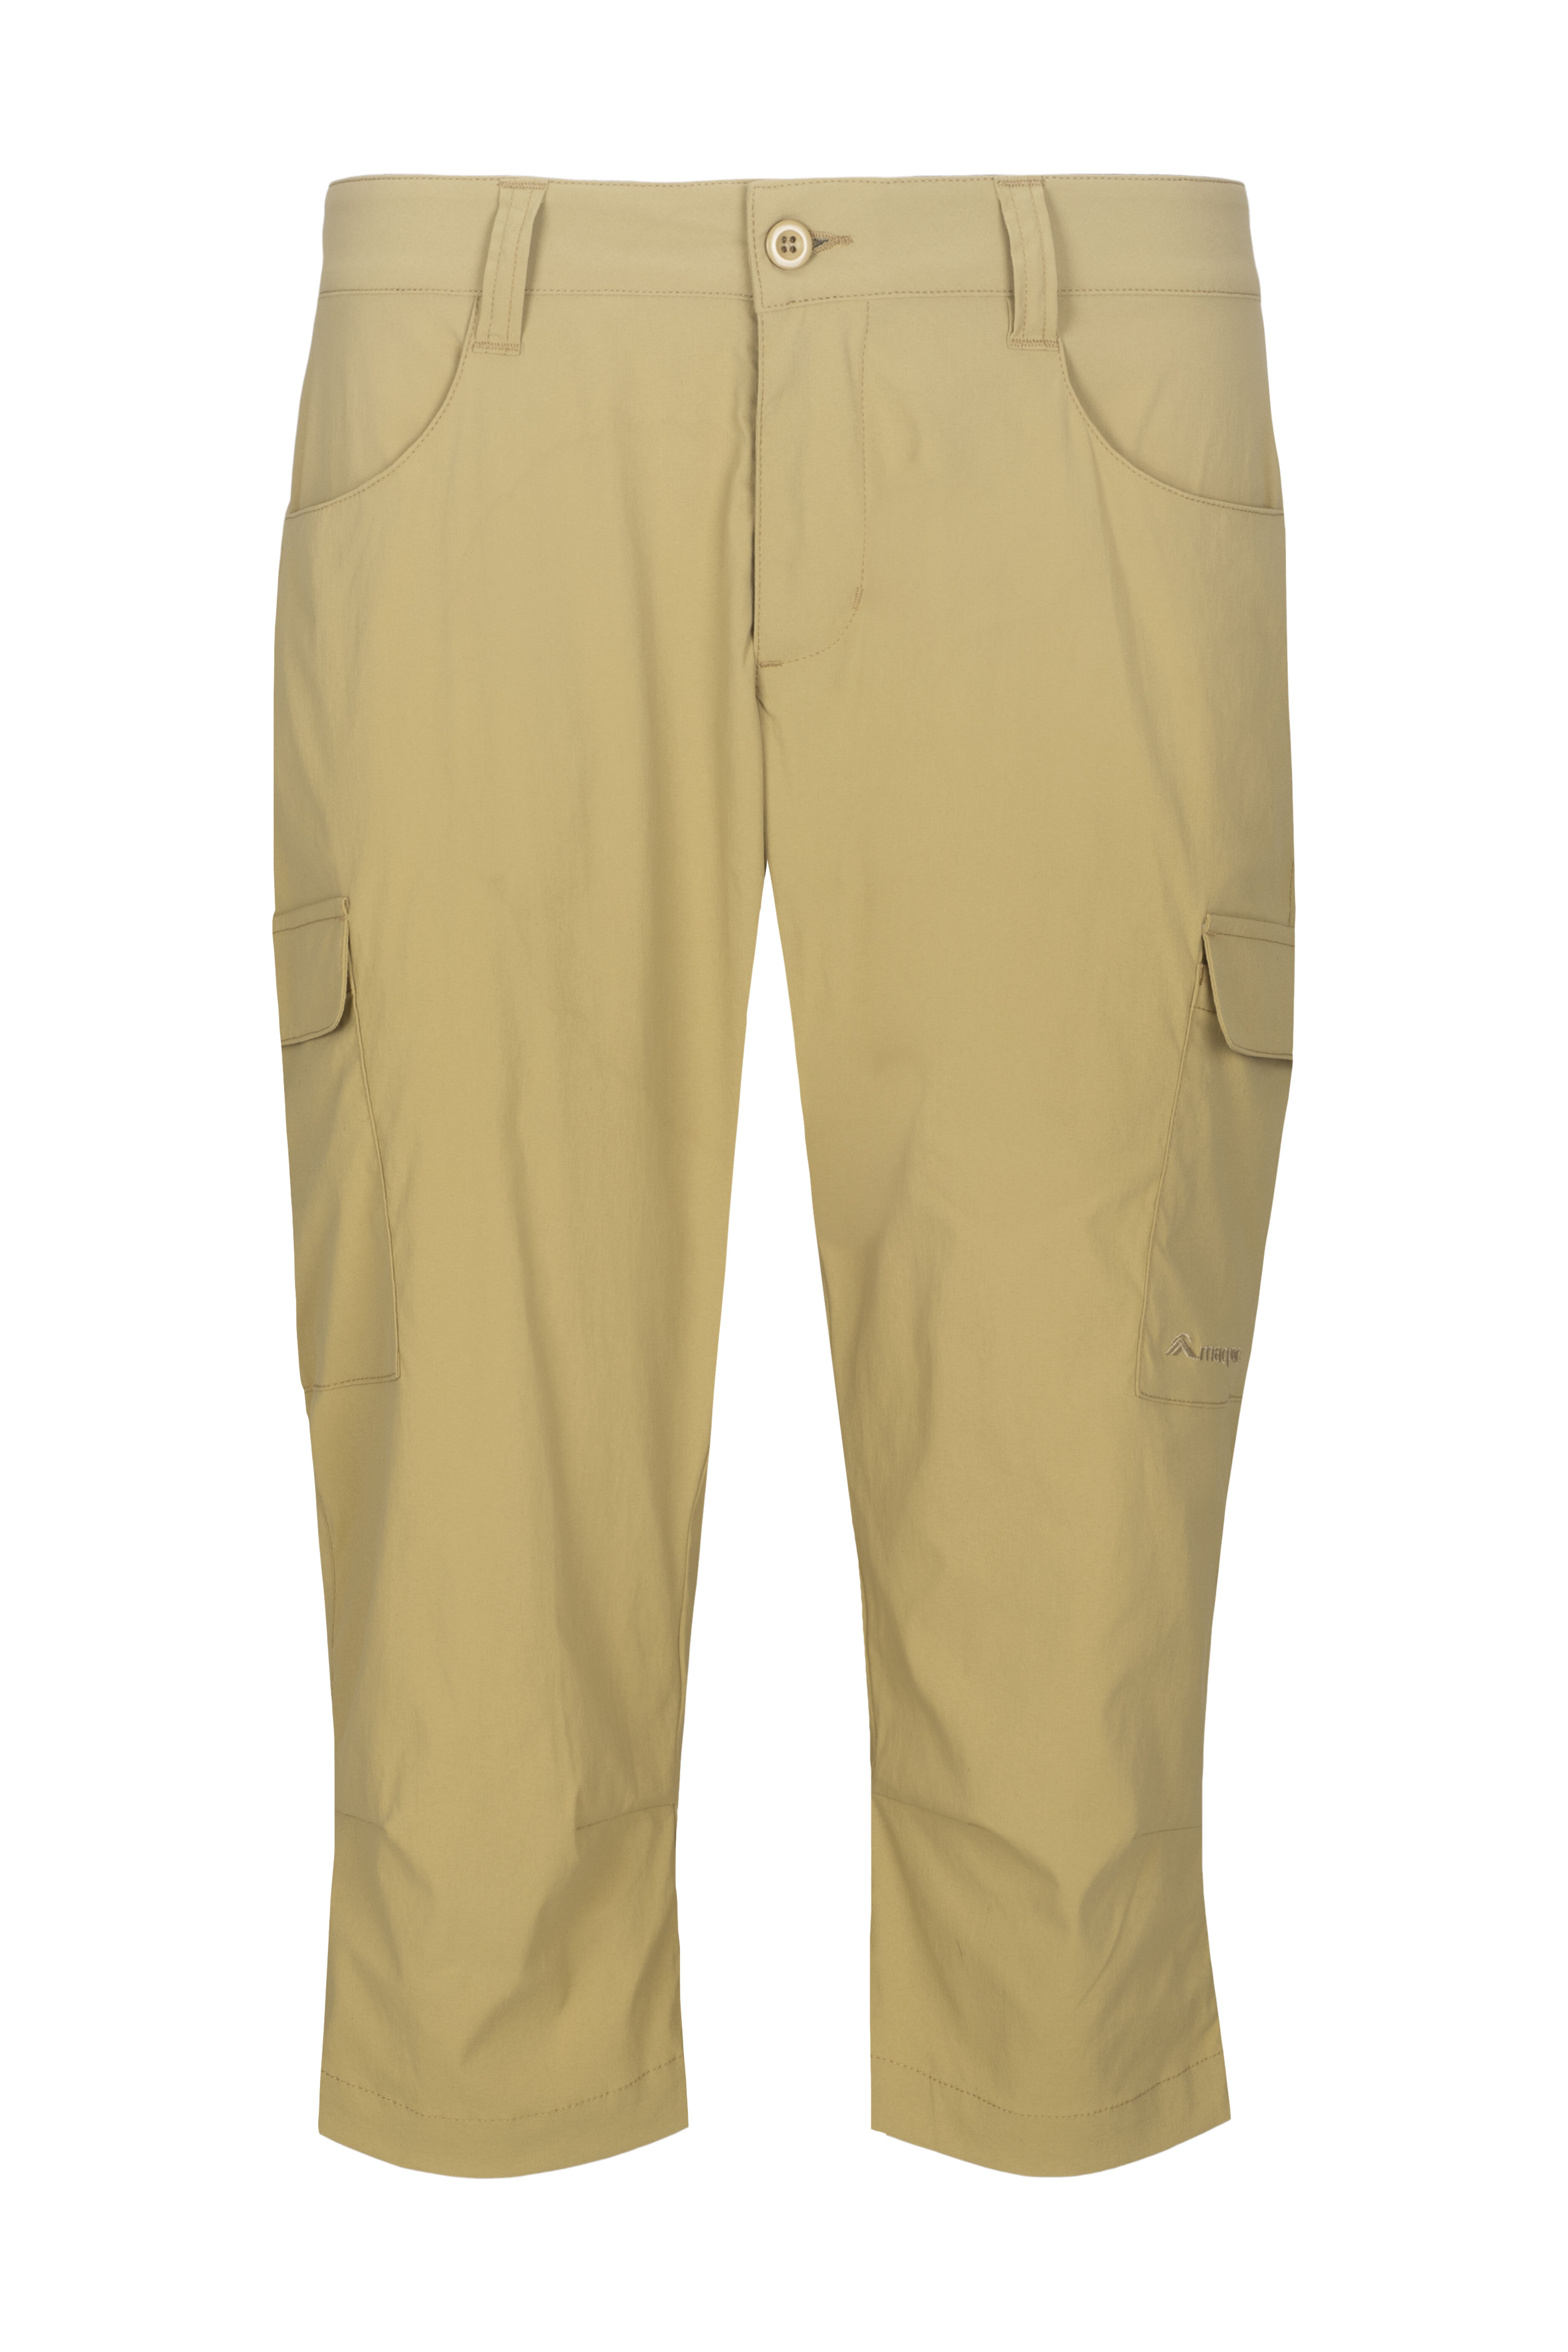 FASKUNOIE Men's Capri Pants 3/4 Below Knee 3 Quarter Long Shorts with  Zipper Pockets Black at Amazon Men's Clothing store